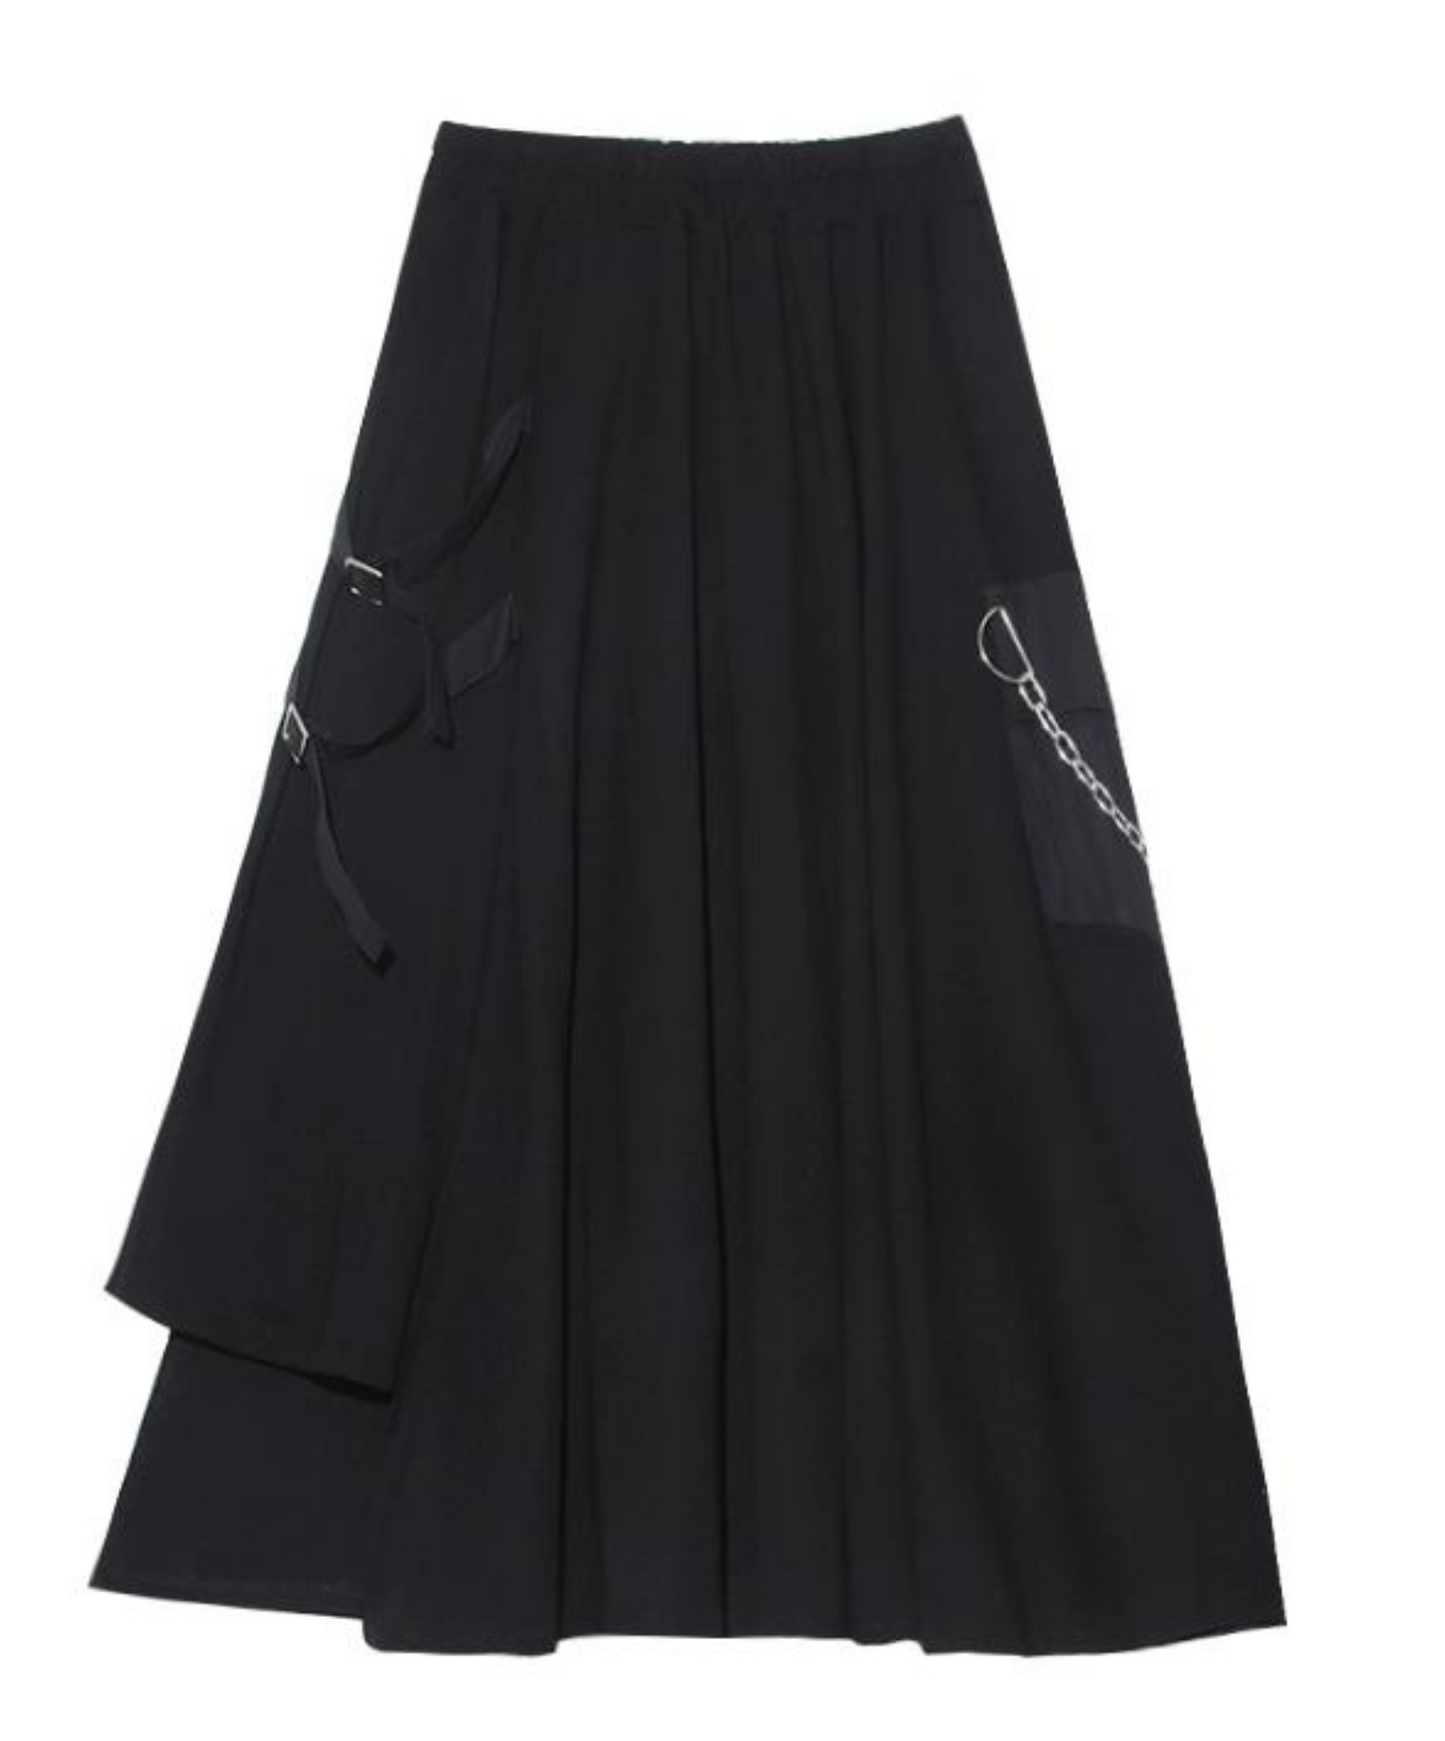 dark chain embellished skirt EN988